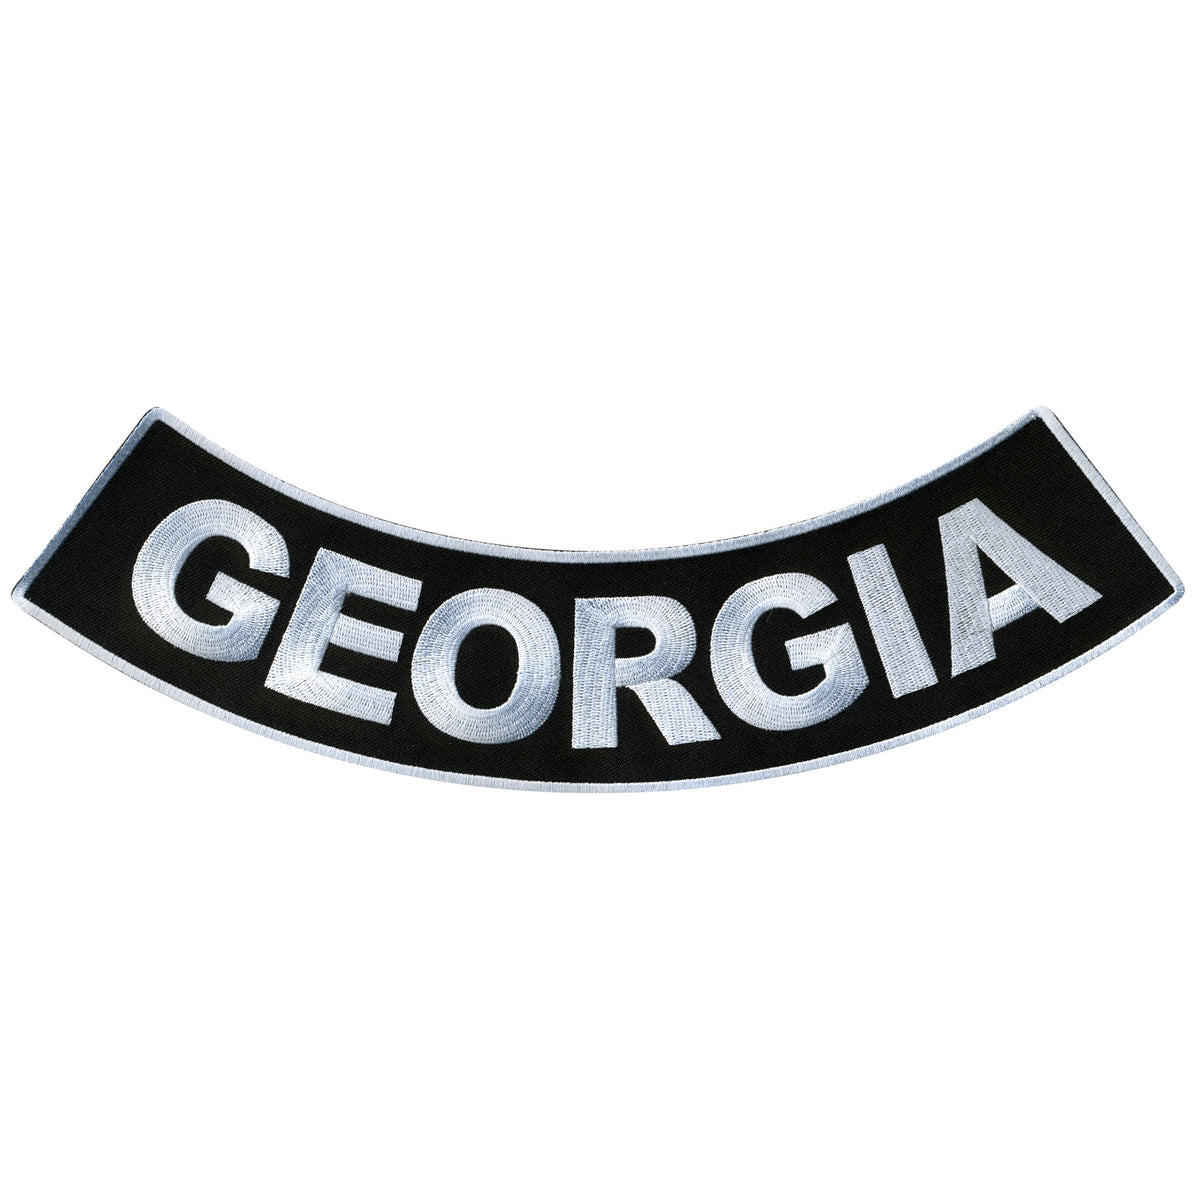 Hot Leathers Georgia 12” X 3” Bottom Rocker Patch